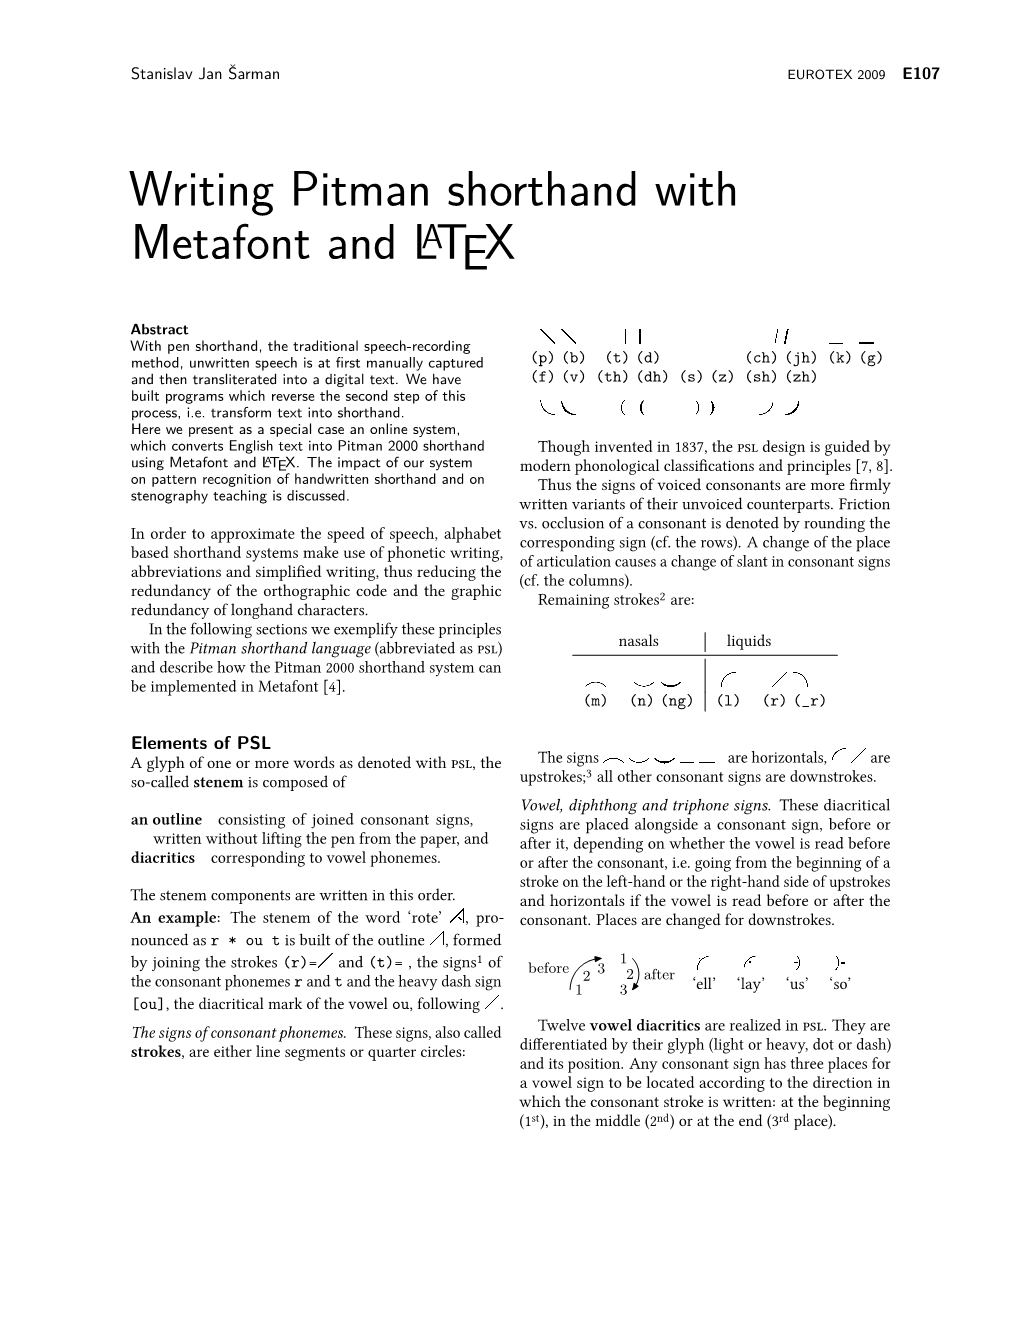 Writing Pitman Shorthand with Metafont and LATEX